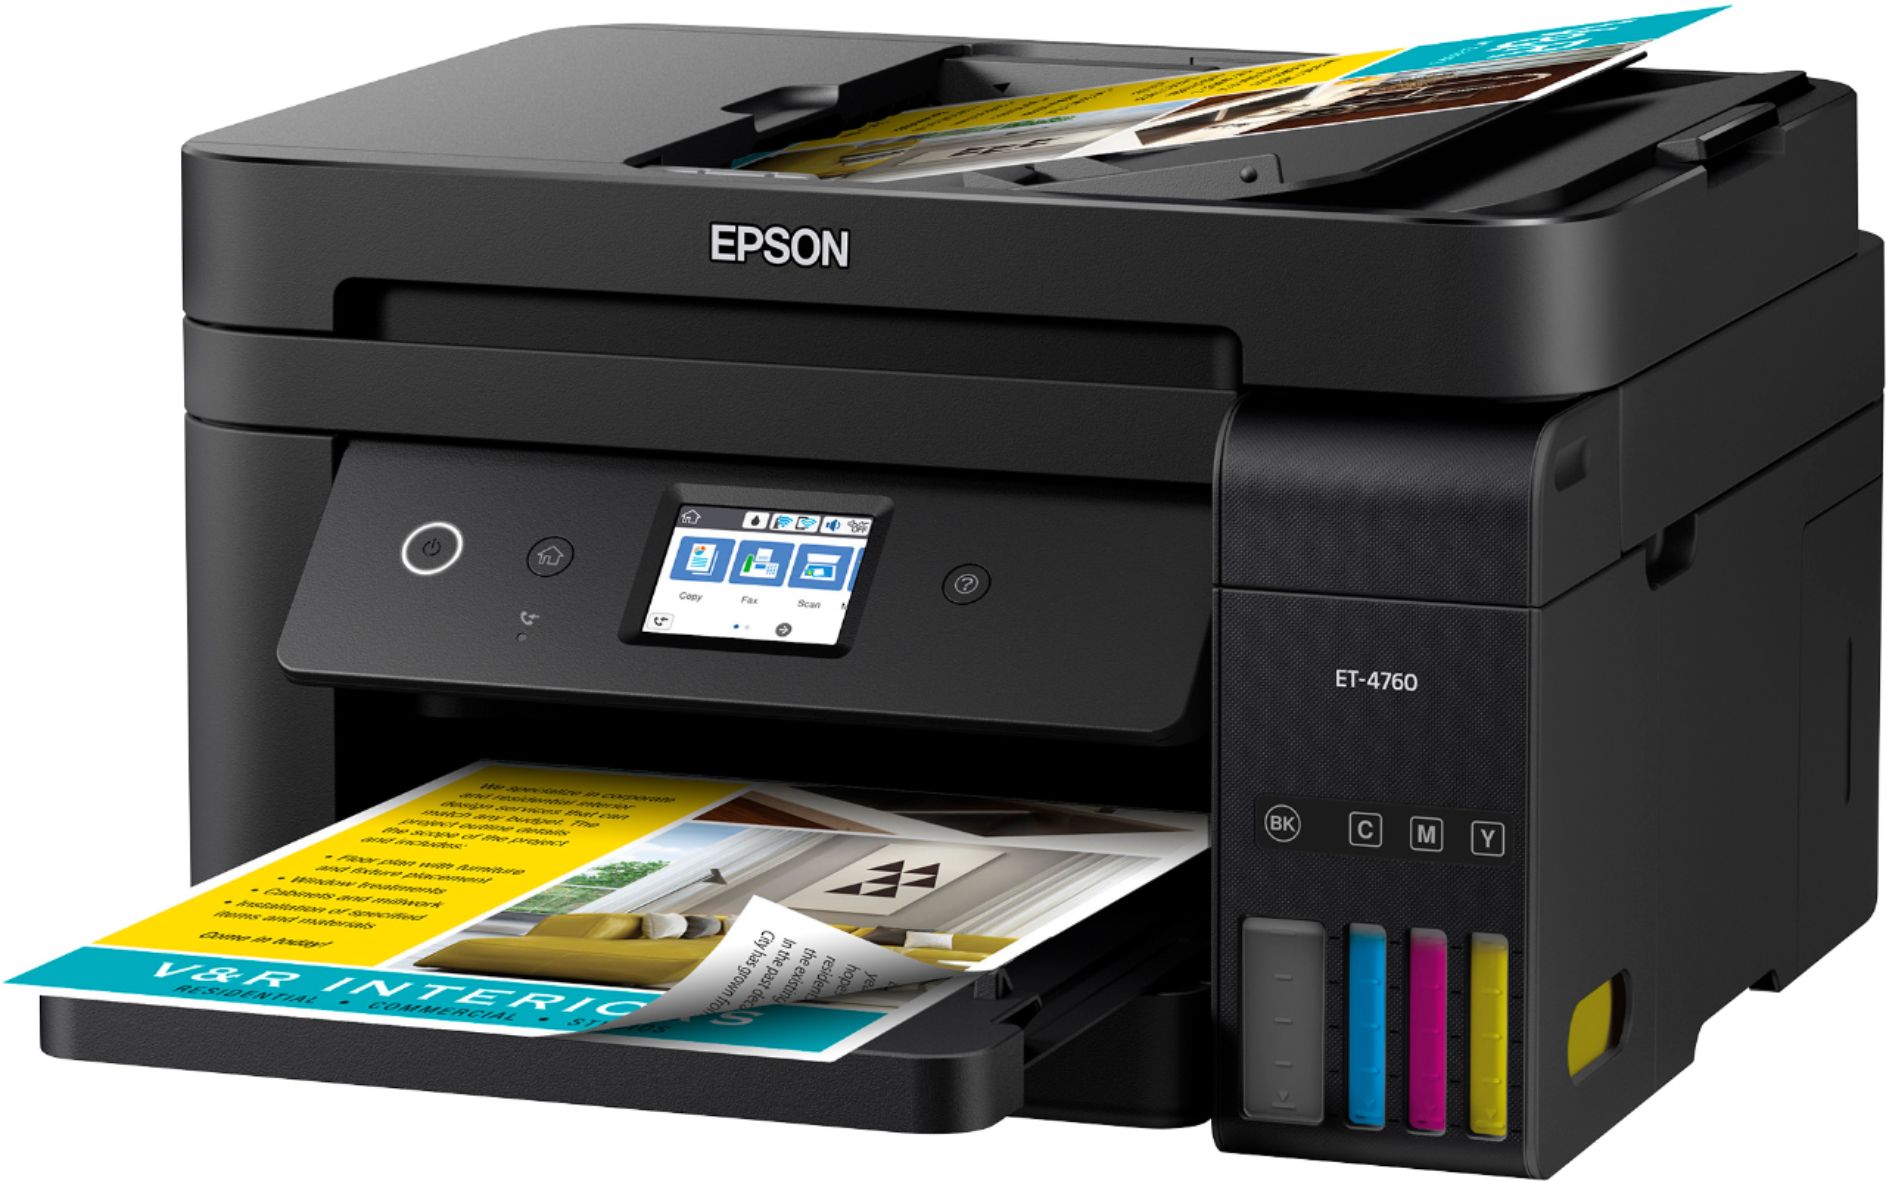  Epson  EcoTank ET 4760 Wireless All In One Printer  Black  